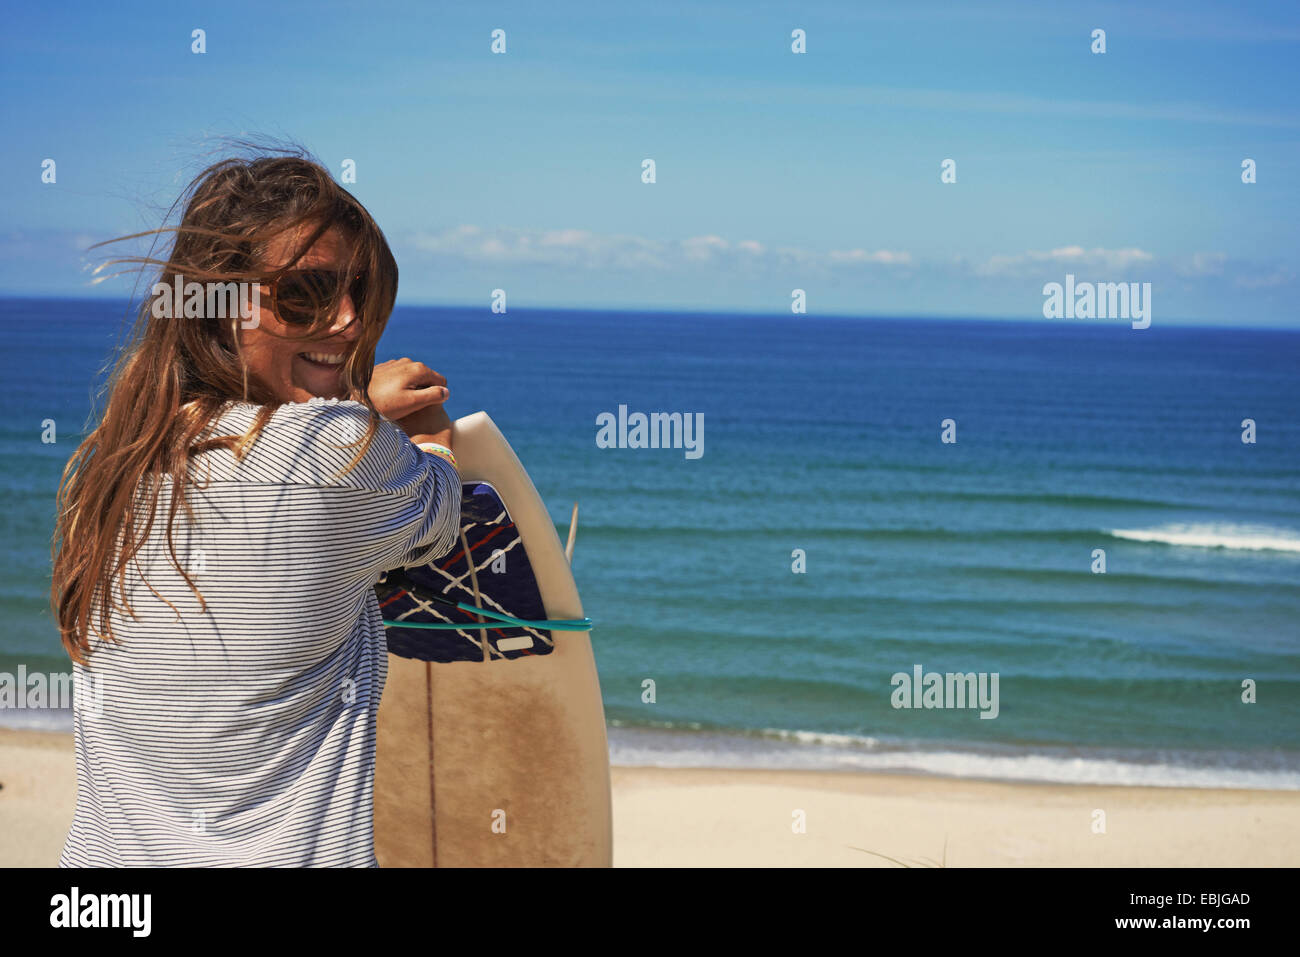 Woman with surfboard on beach, Lacanau, France Stock Photo